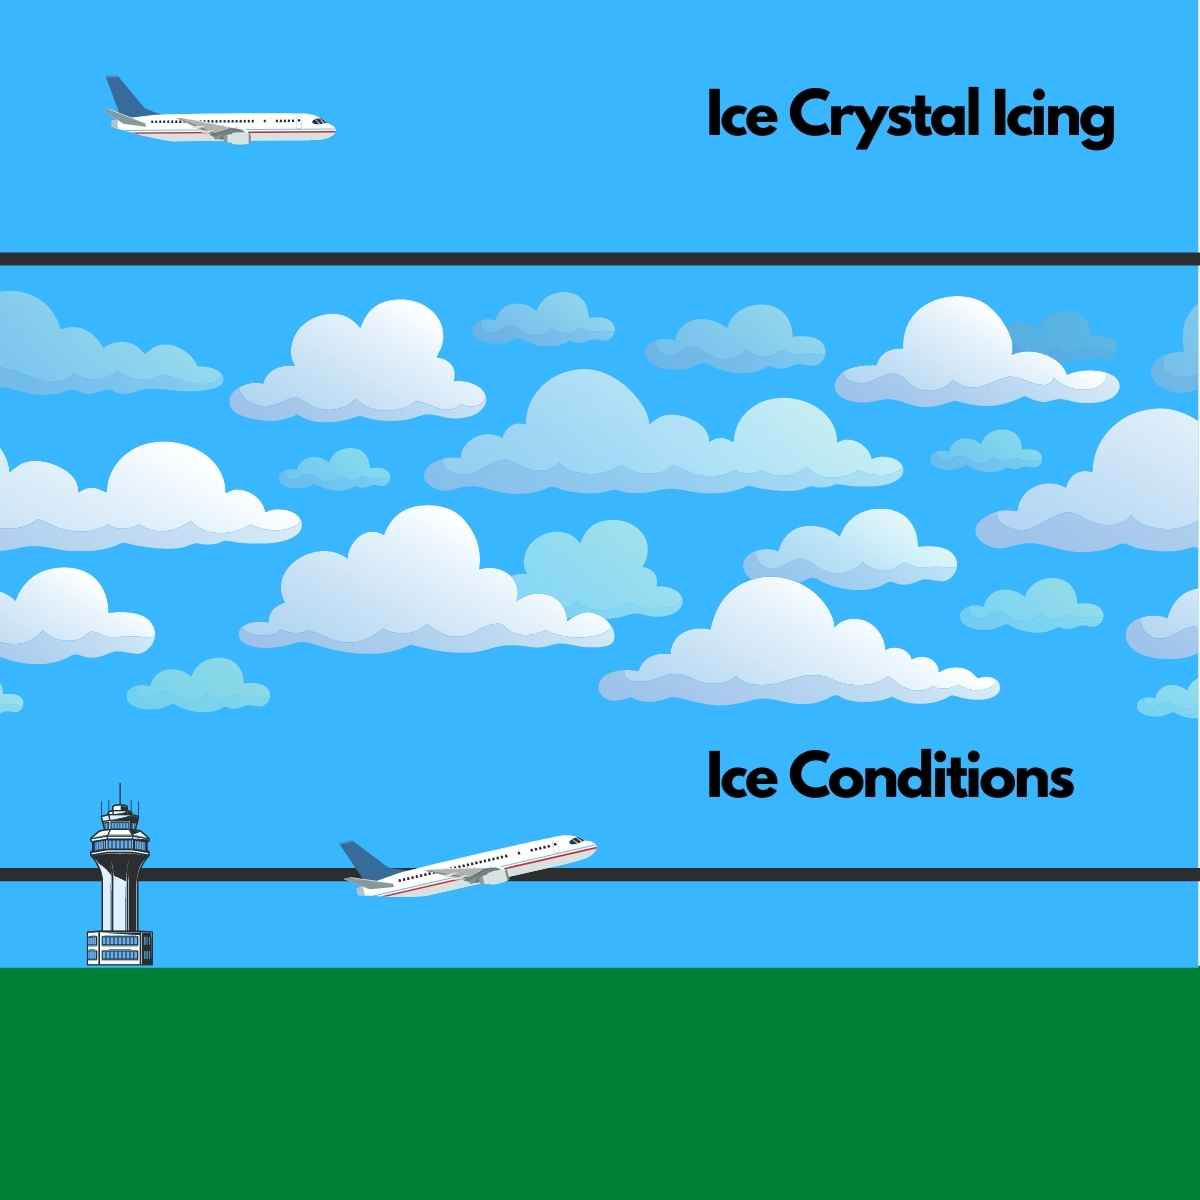 Ice crystal icing